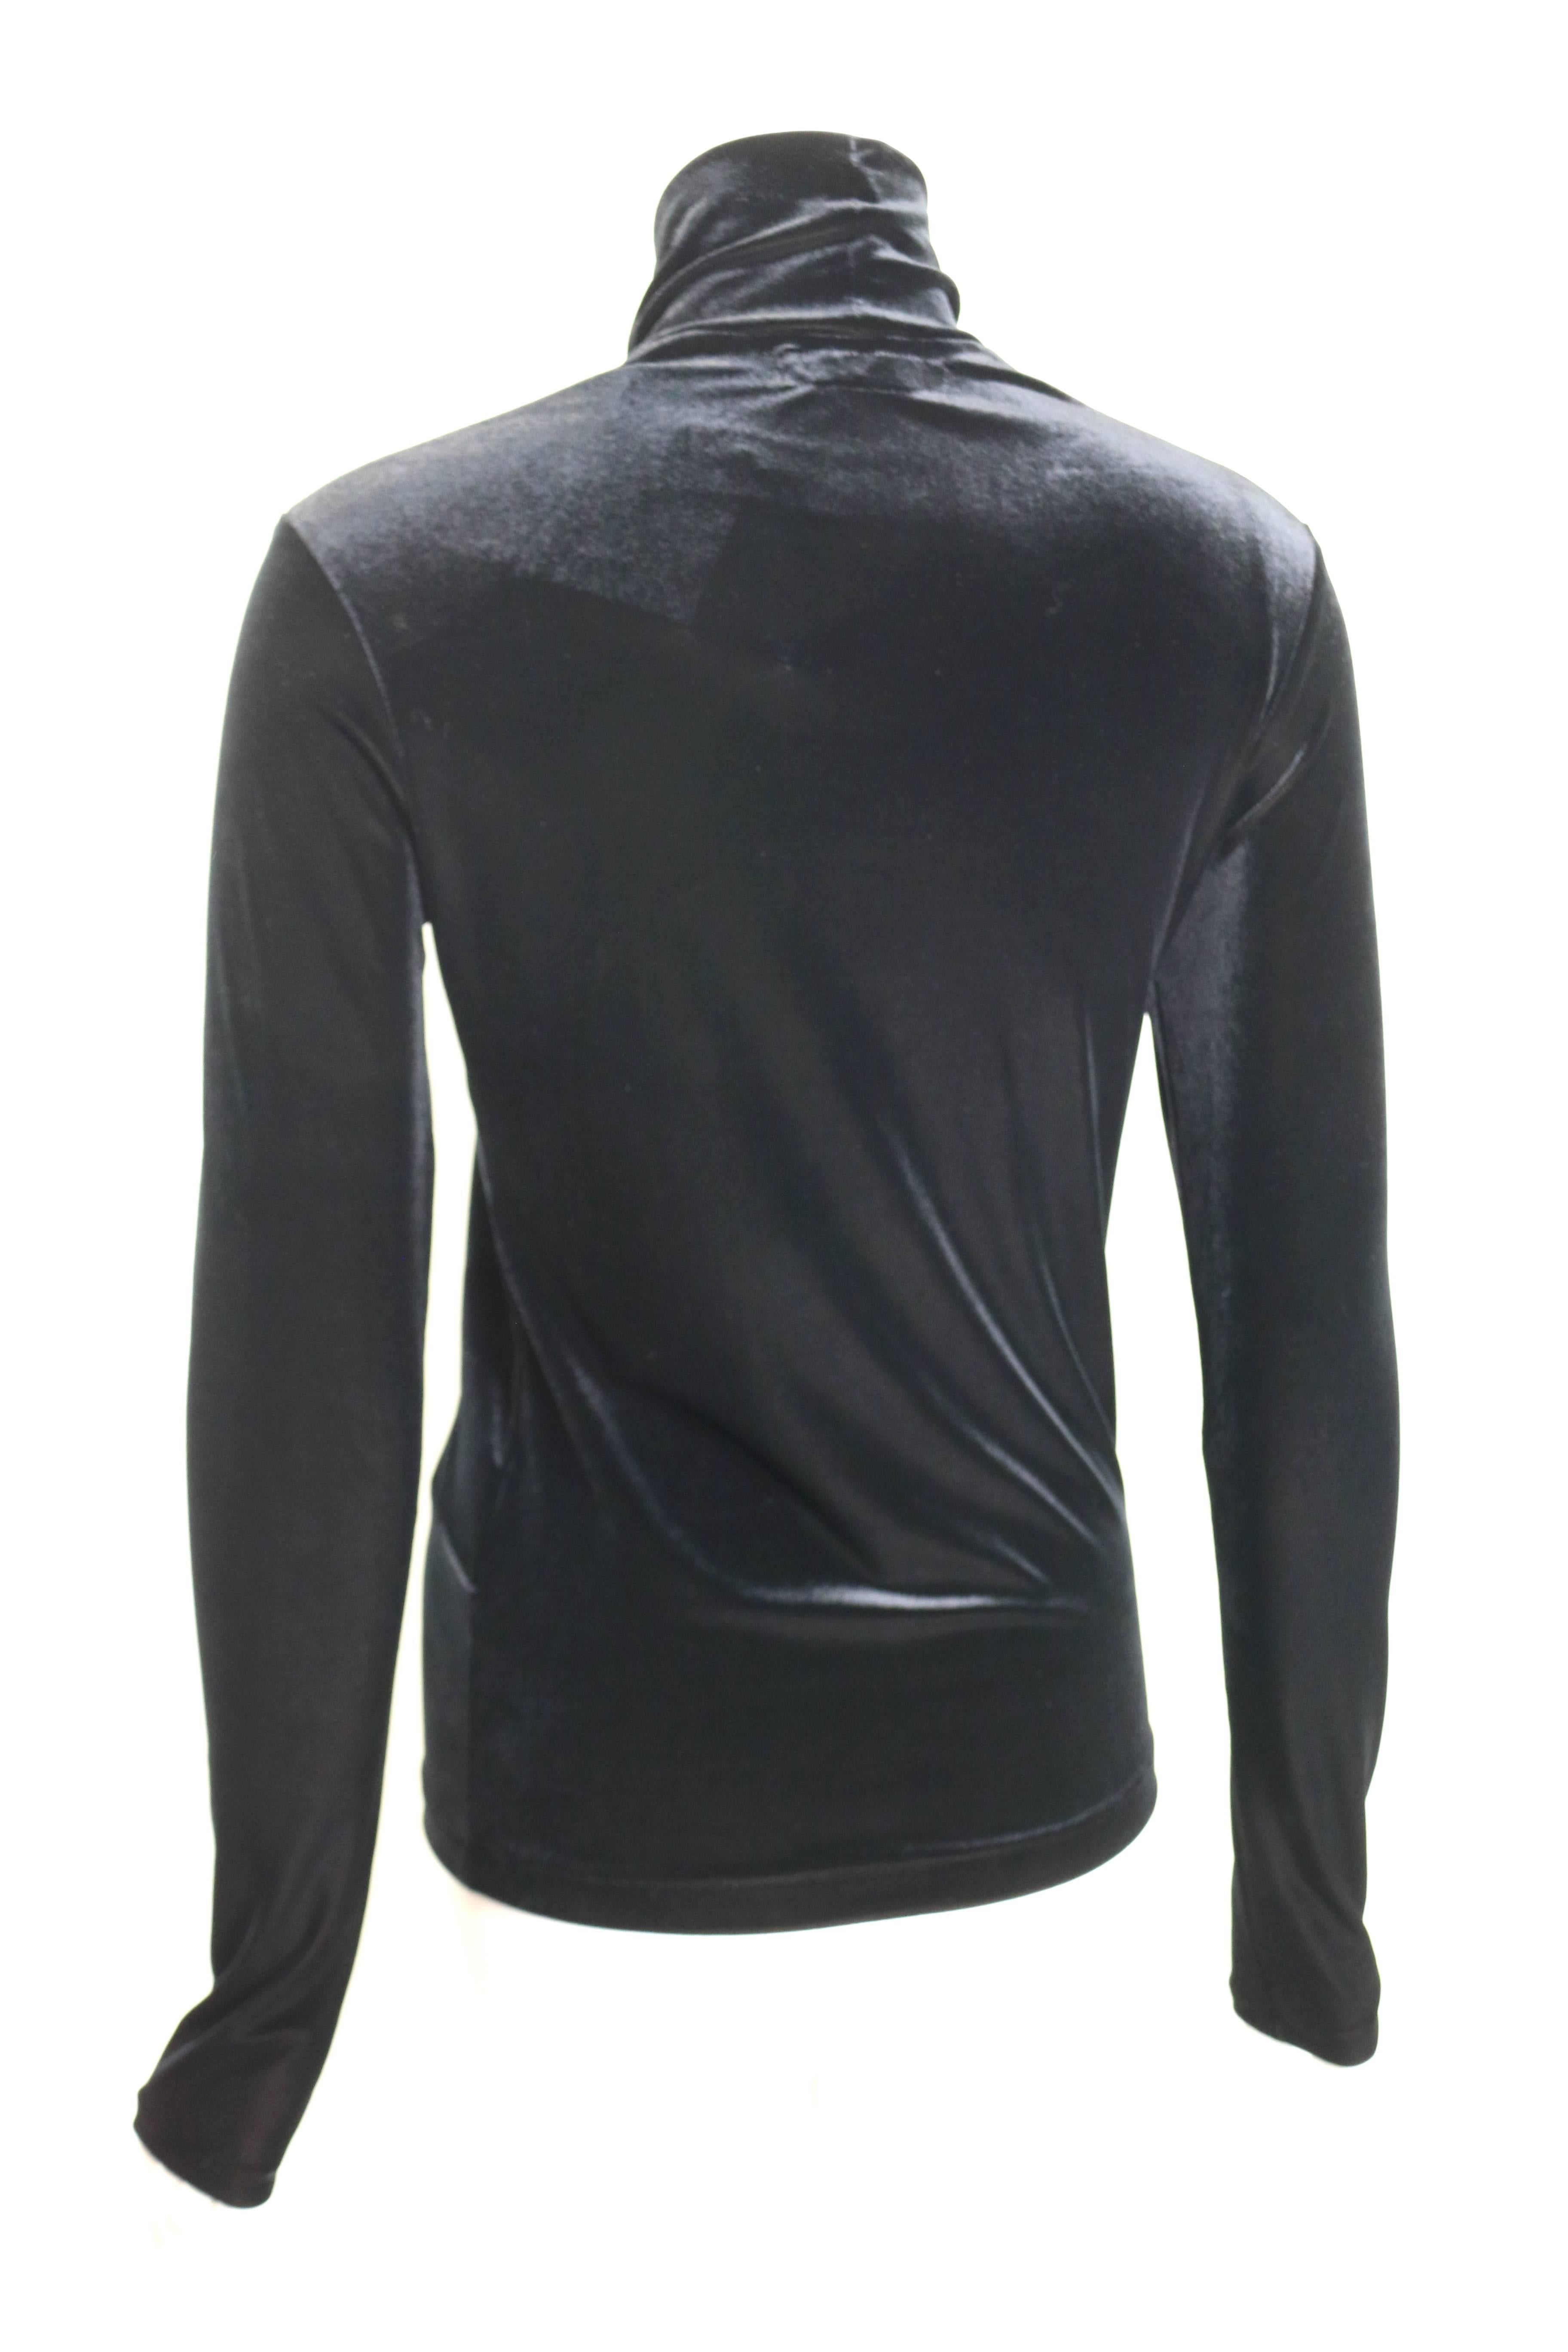 - Vintage 90s Y's by Yohji Yamamoto black velvet long sleeves turtleneck top. 

- Made in Japan. 

- Size 3.

- 90% Polyester, 10% Polyurethane. 

